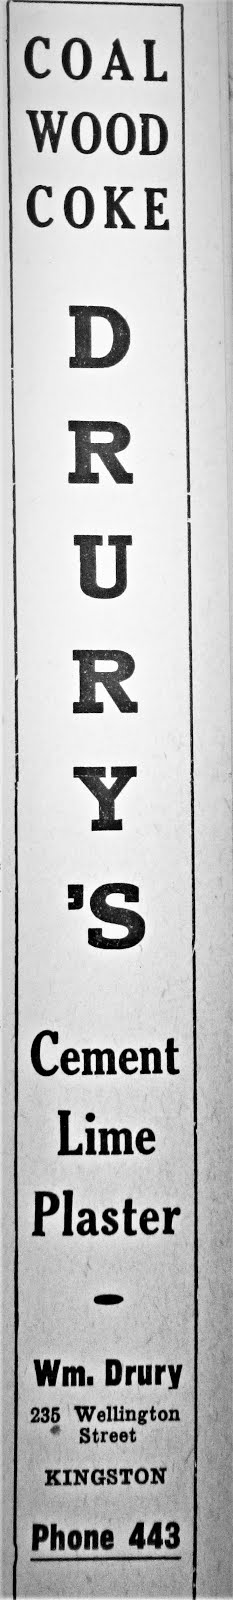 1929 Directory Ad